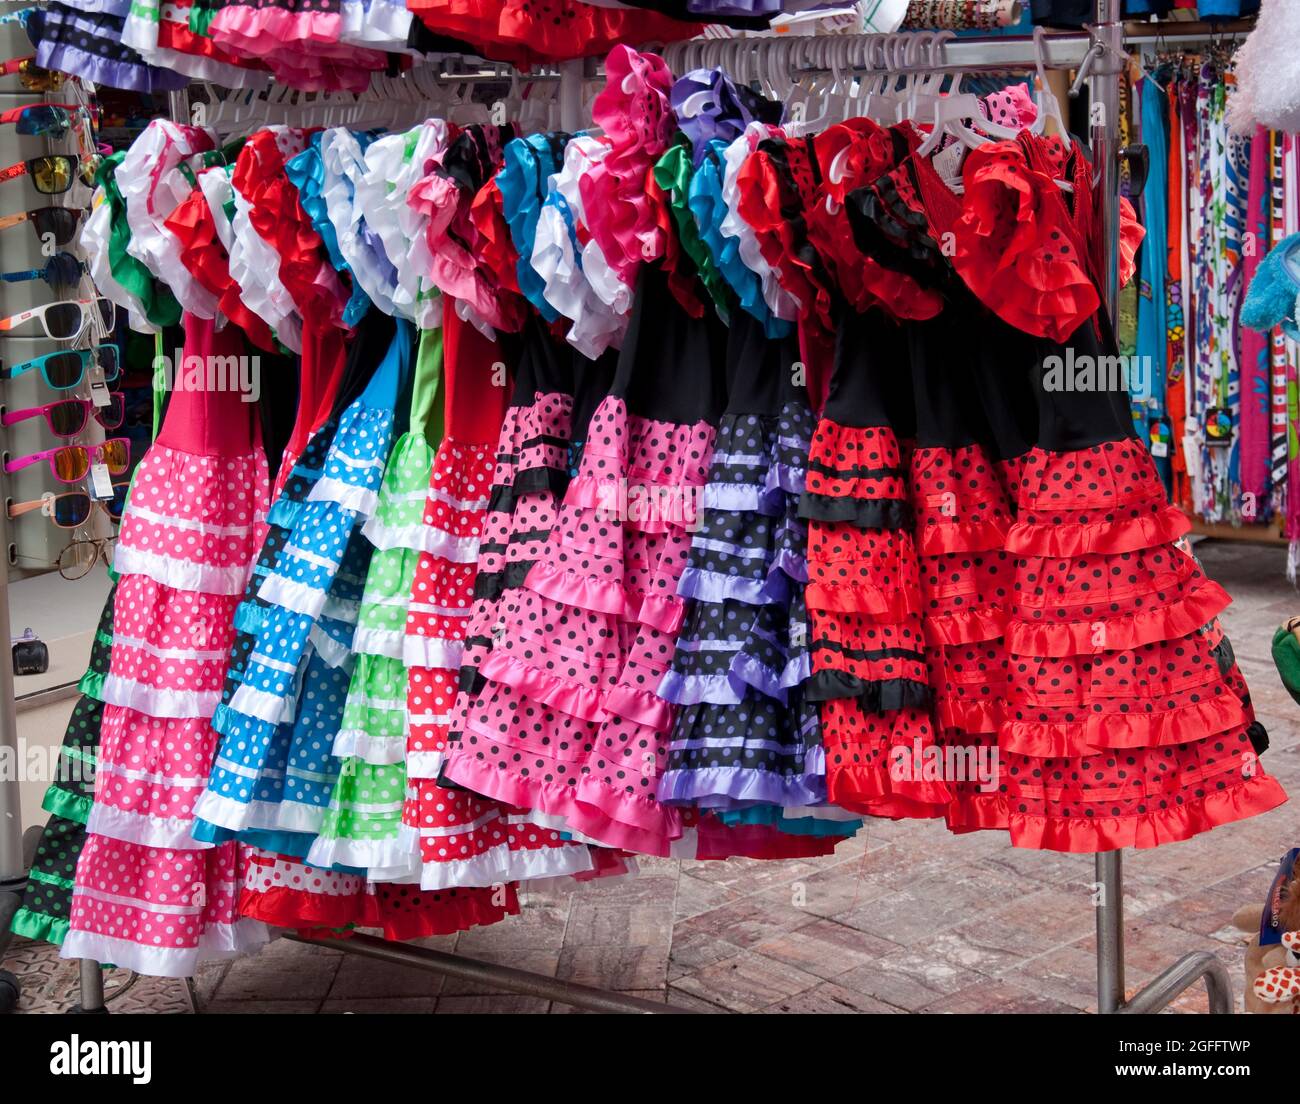 Robes flamenco en vente, Nerja, Costa del sol, province de Malaga, Andalousie, Espagne Banque D'Images